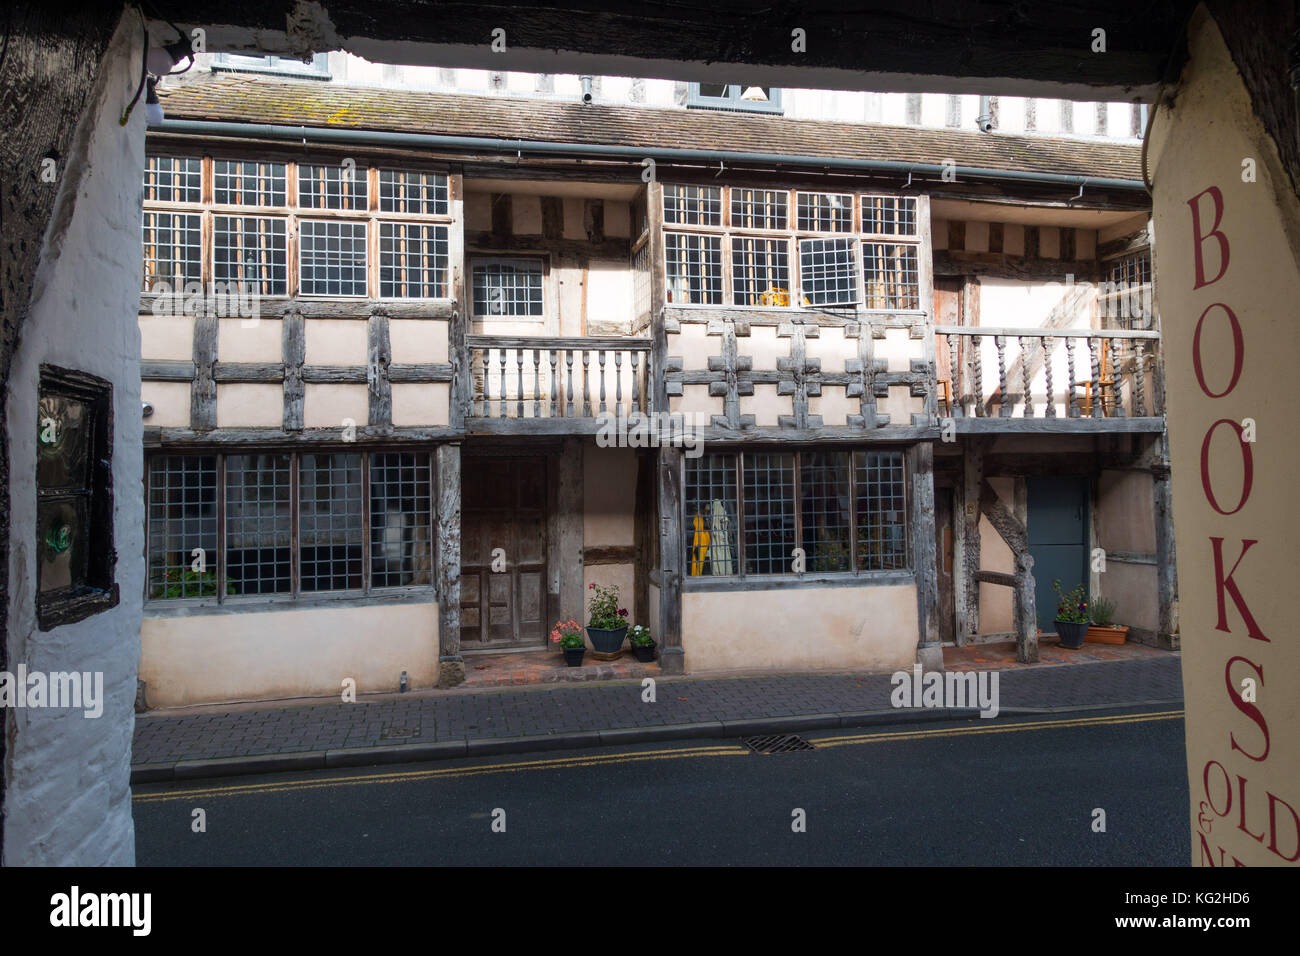 Raynolds Mansion - John und Mary 1682 raynolds-in Much Wenlock, Shropshire, England Stockfoto